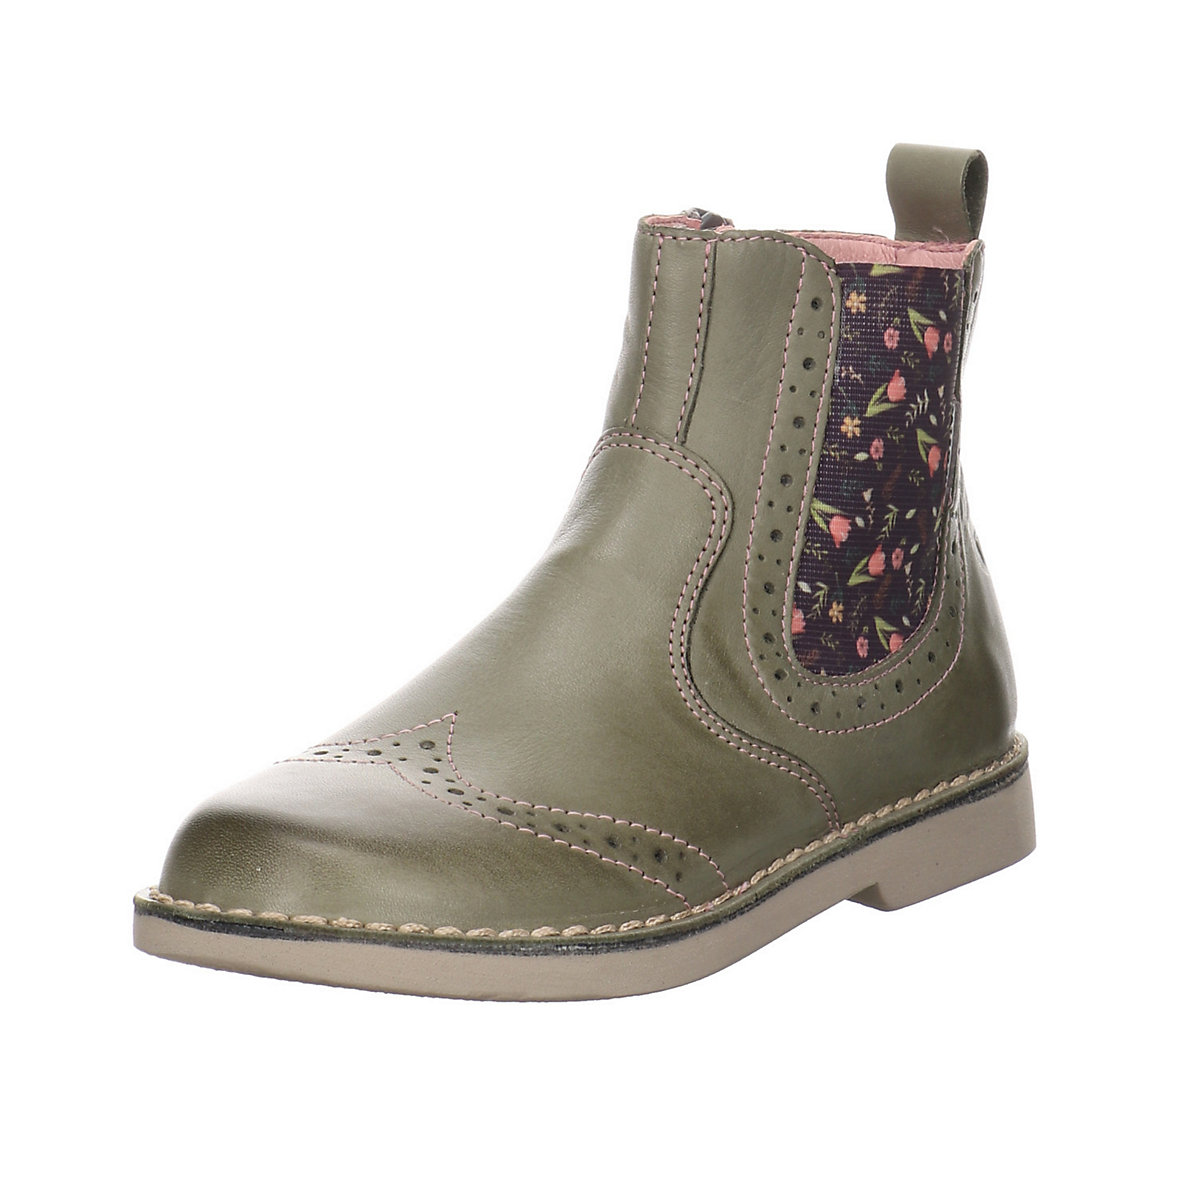 RICOSTA Mädchen Stiefel Schuhe Dallas Chelsea Boots Kinderschuhe Glattleder geblümt Stiefel grün